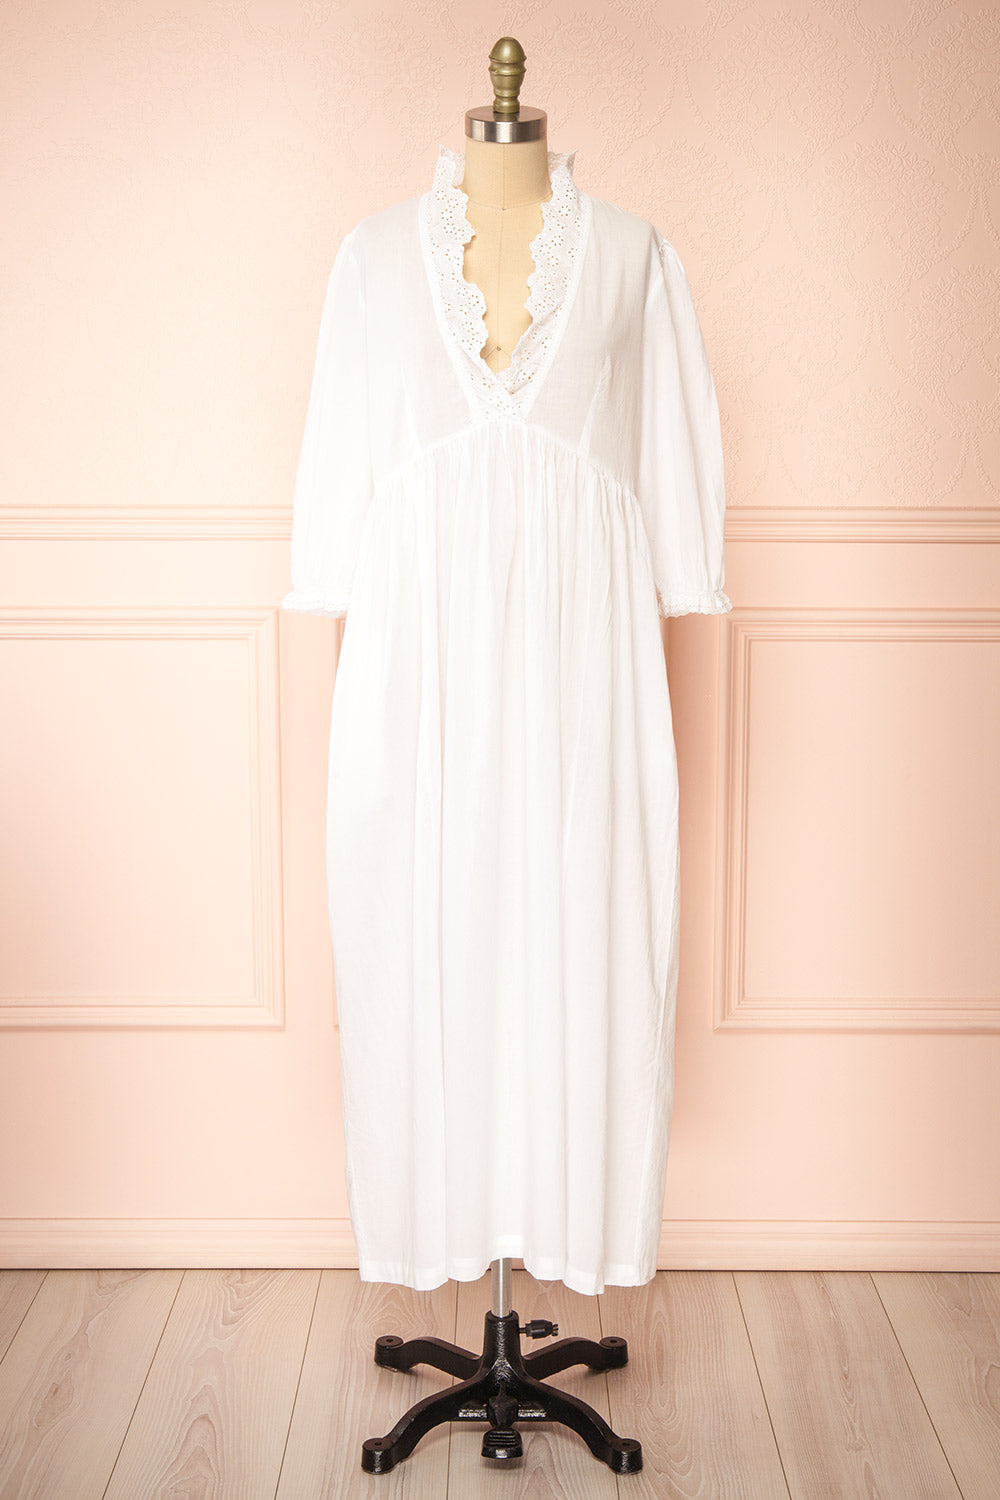 Doriane White Cotton Nightgown | Boutique 1861 front view